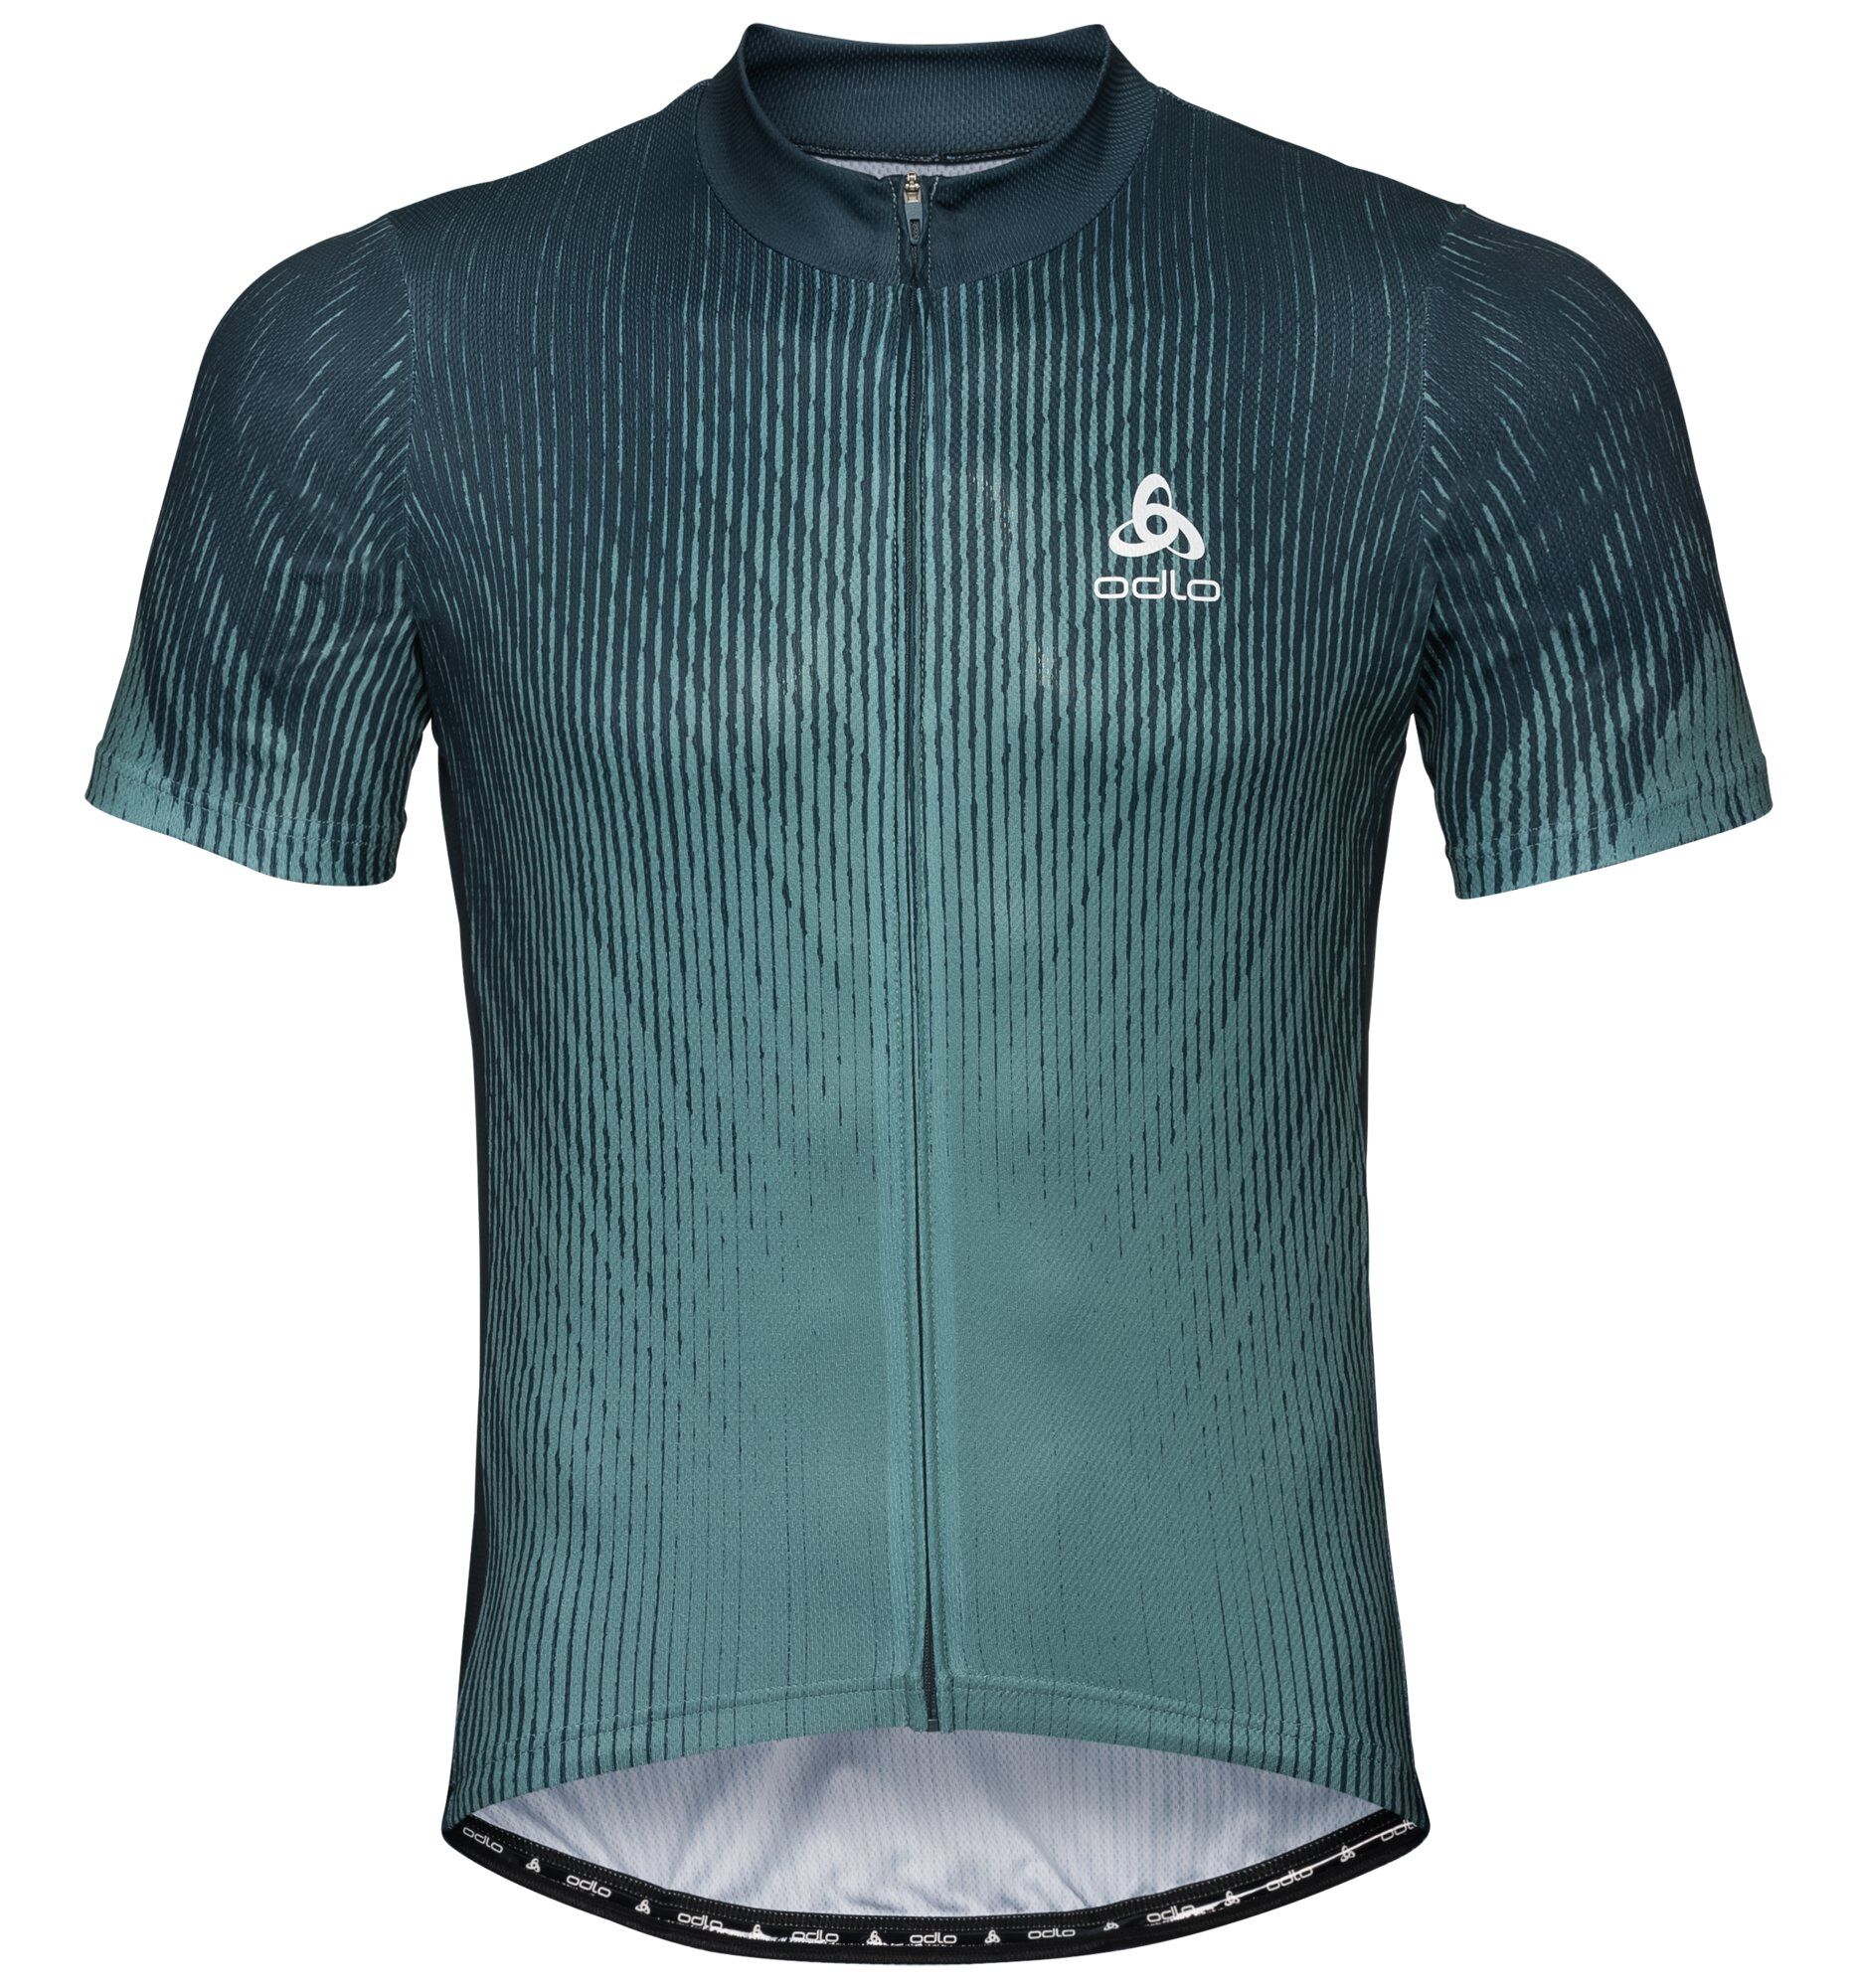 Odlo - Element Print - Cycling shirt - Men's